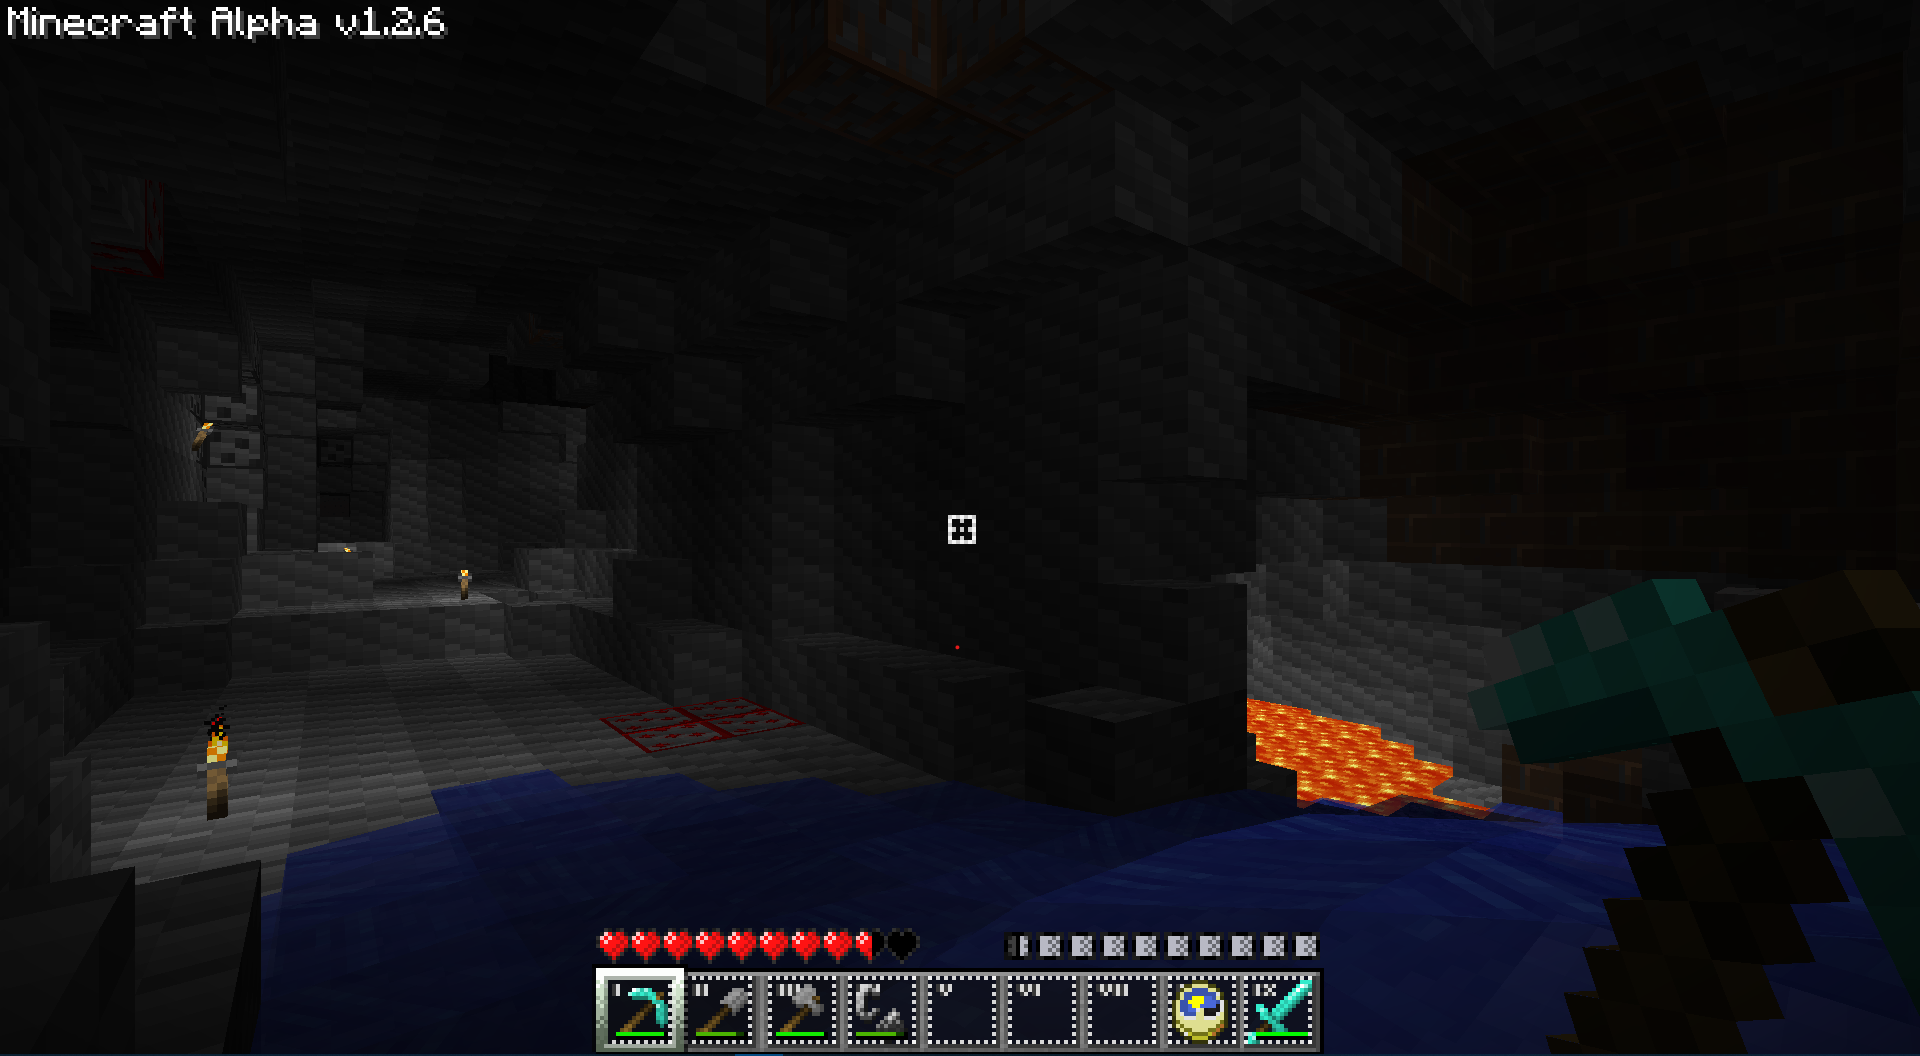 Dark Caves